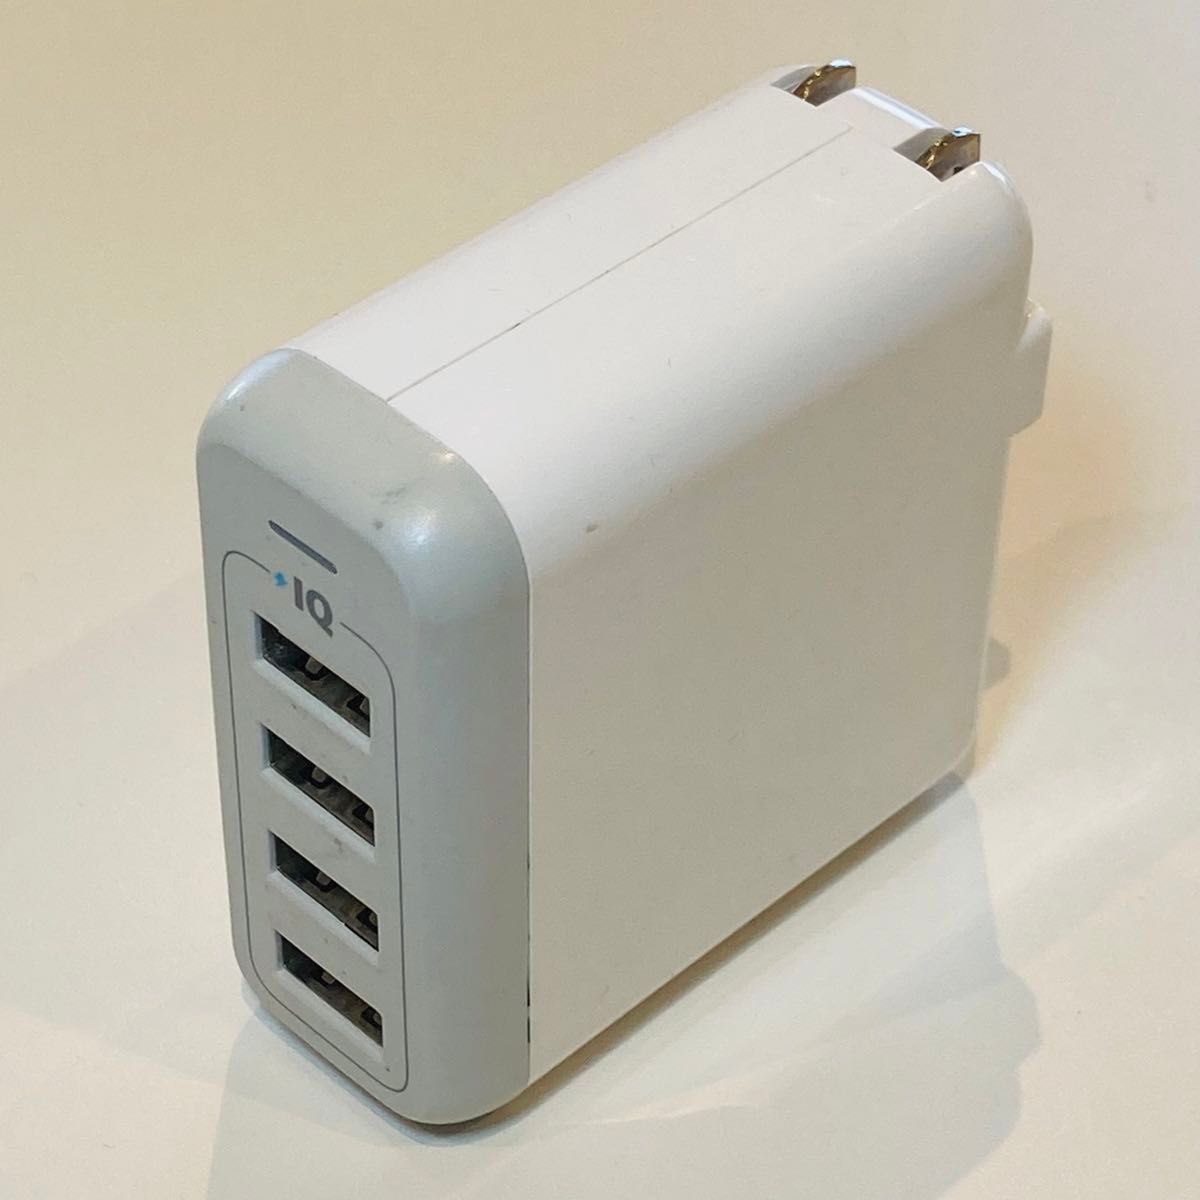 ANKER PowerPort 4 40W 4ポート USB急速充電器 ホワイト